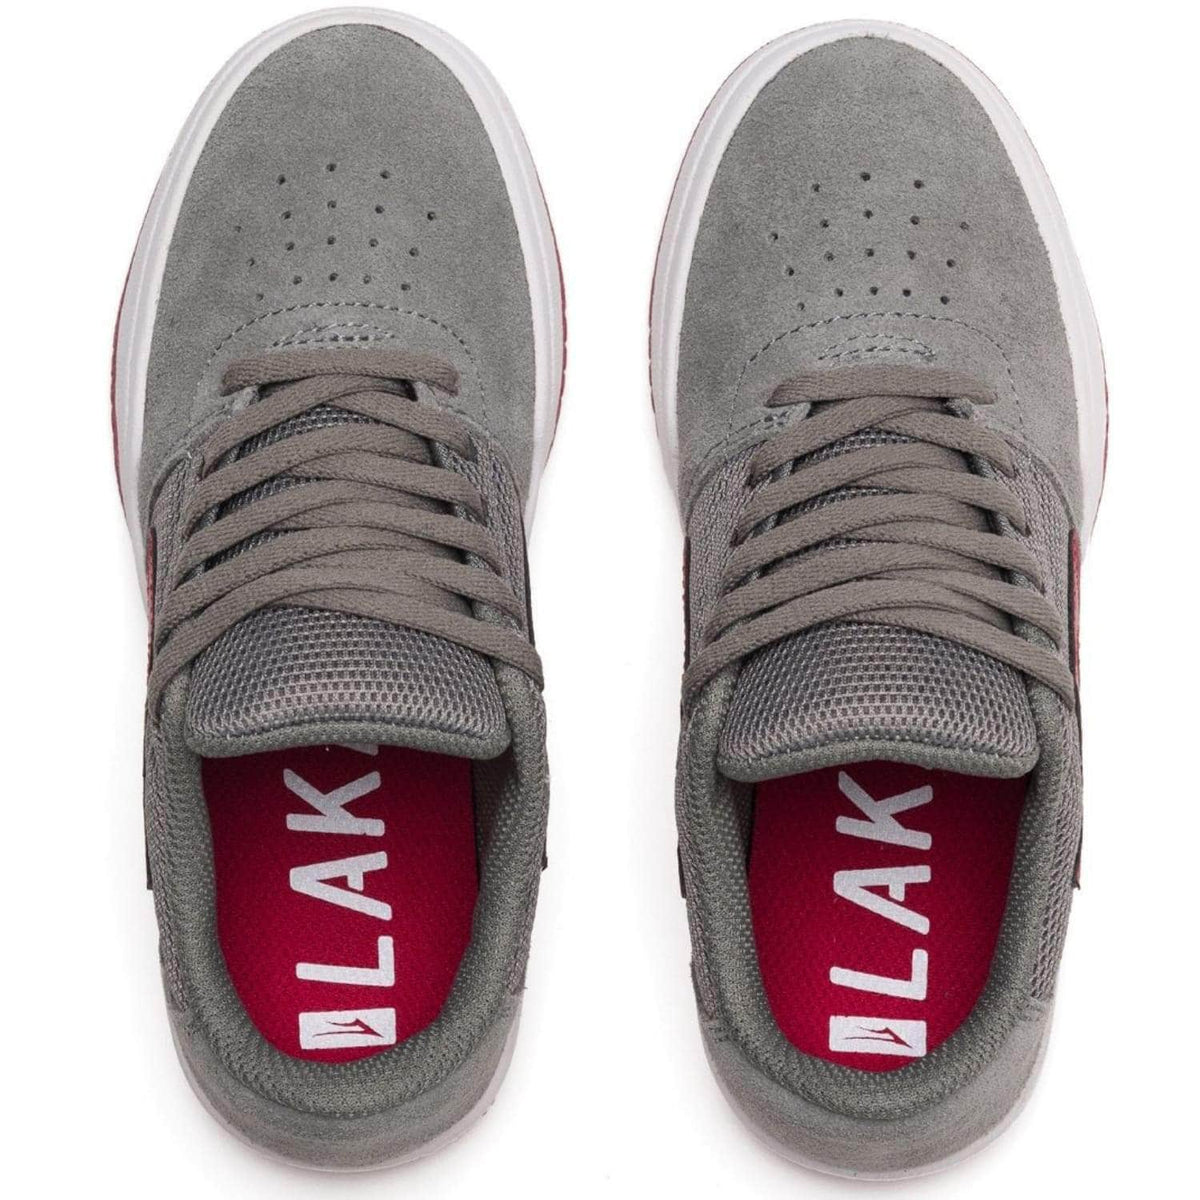 Lakai Kids Brighton Skate Shoes - Grey/Red Suede